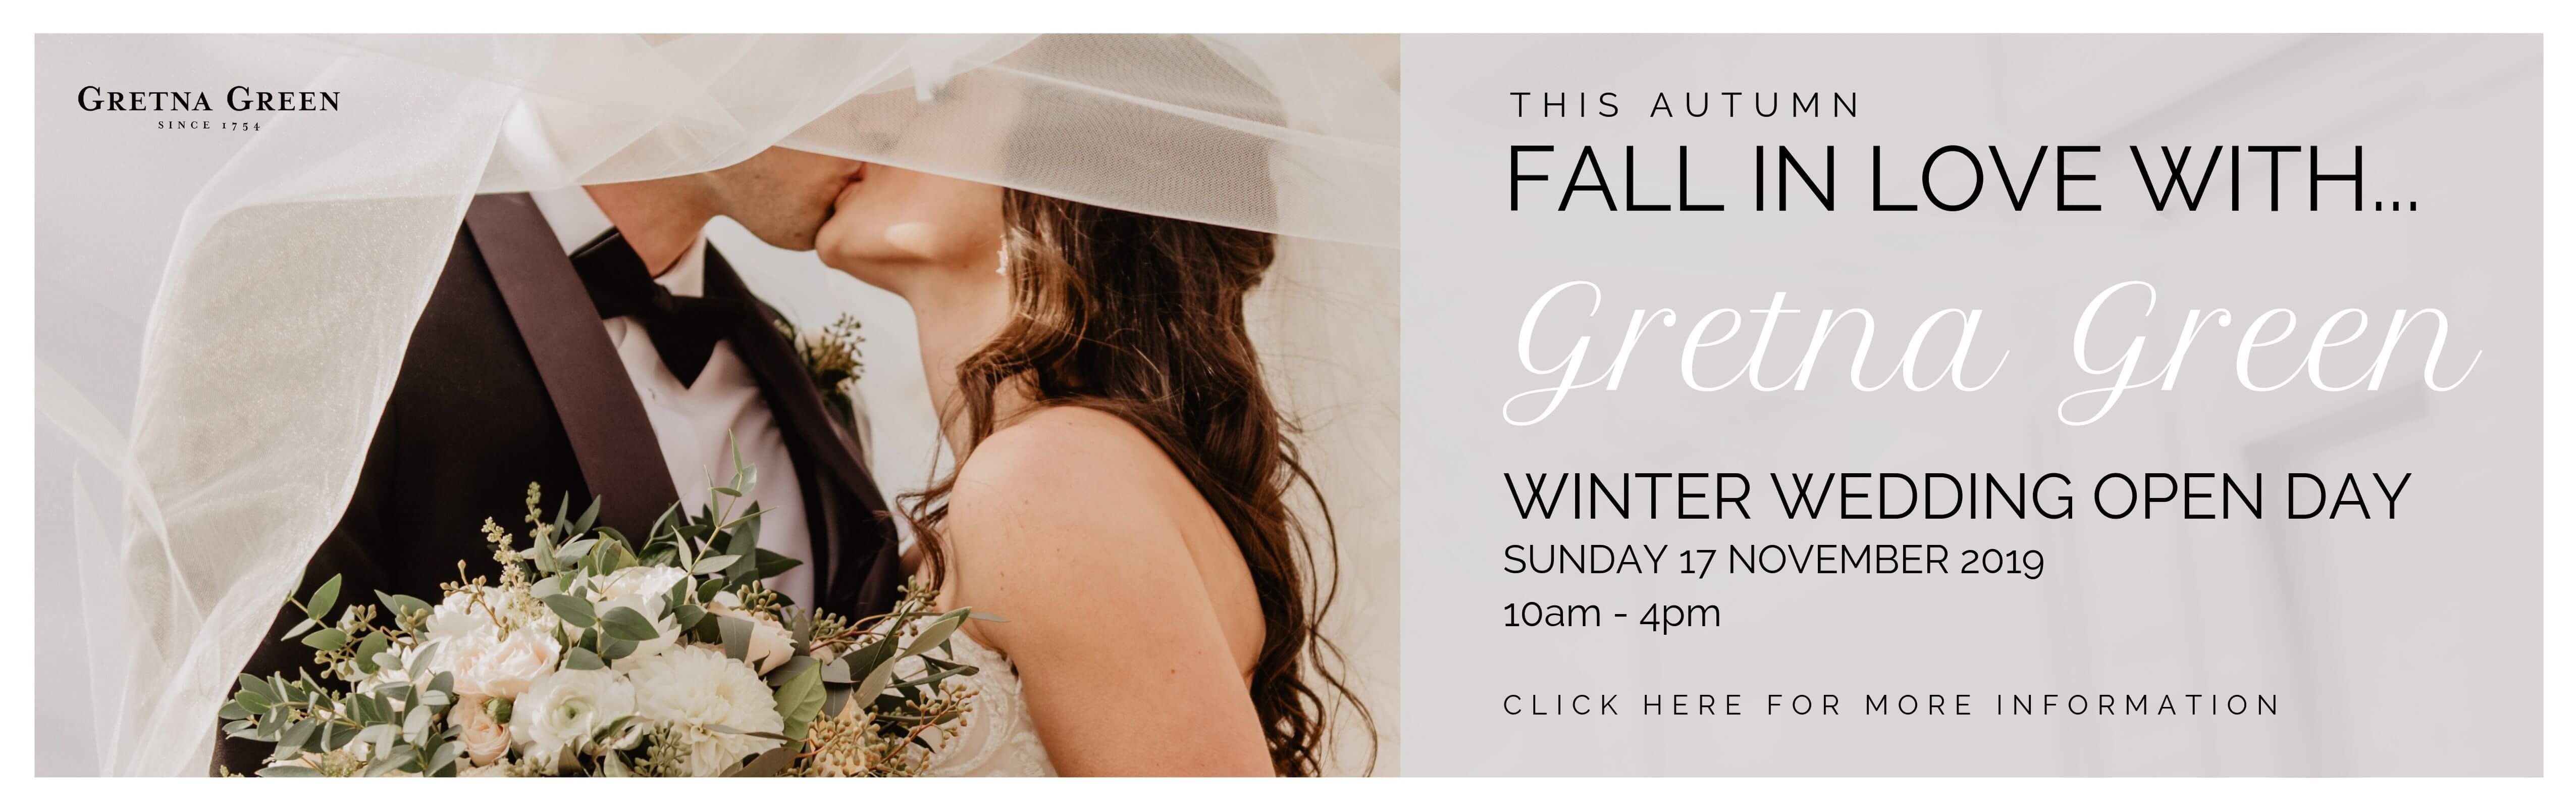 Gretna Green Winter Wedding Open Day 2019